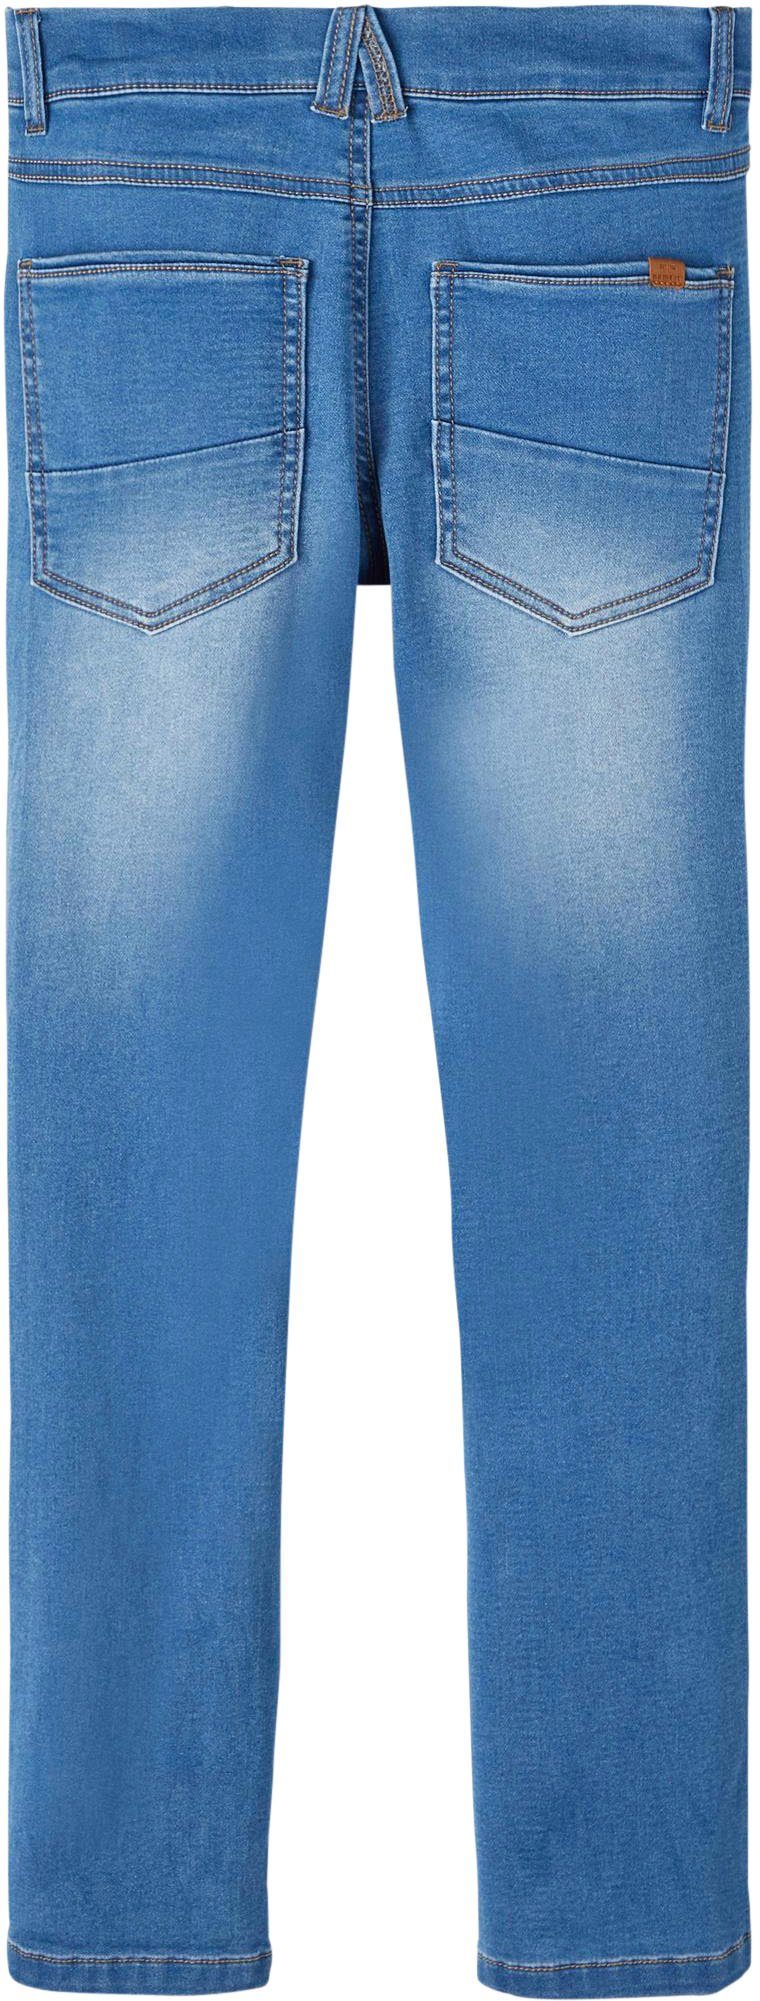 denim Stretch-Jeans SWE It blue Name NKMTHEO COR1 DNMTHAYER medium PANT